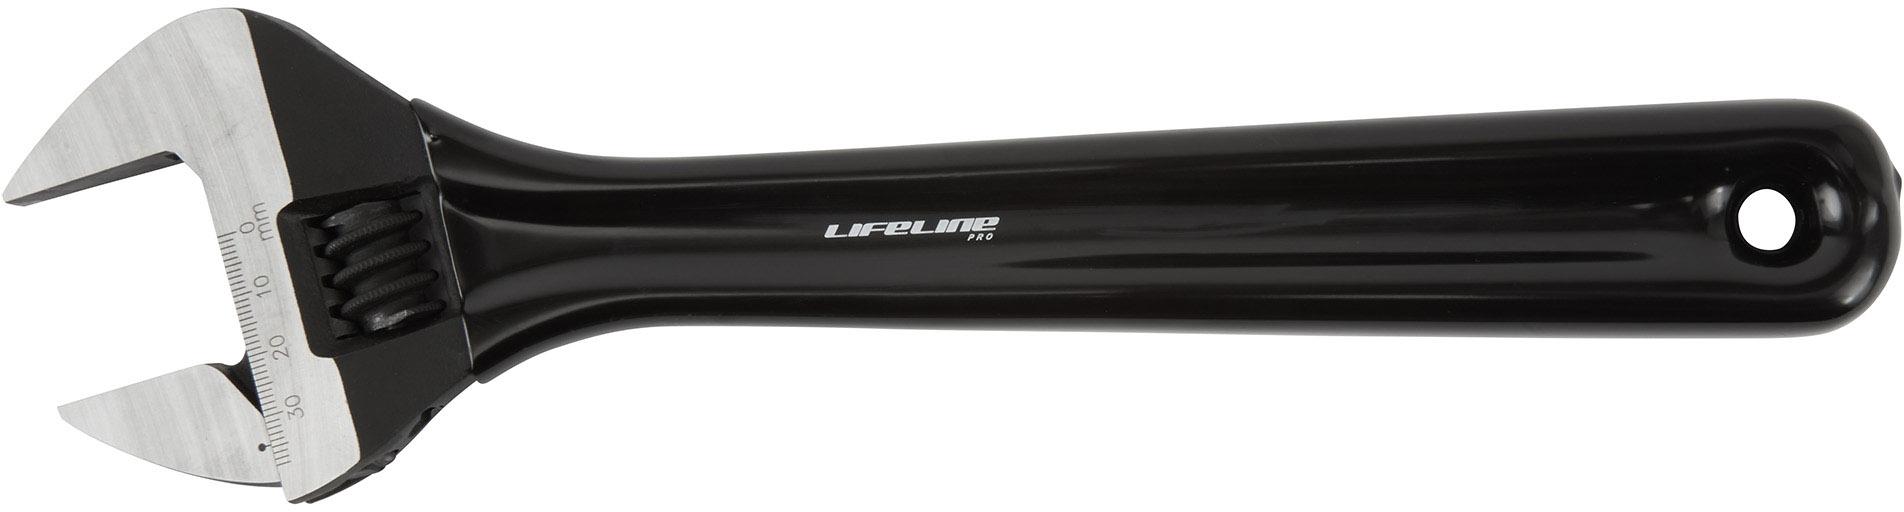 Lifeline Pro 12 Long Adjustable Wrench - Black